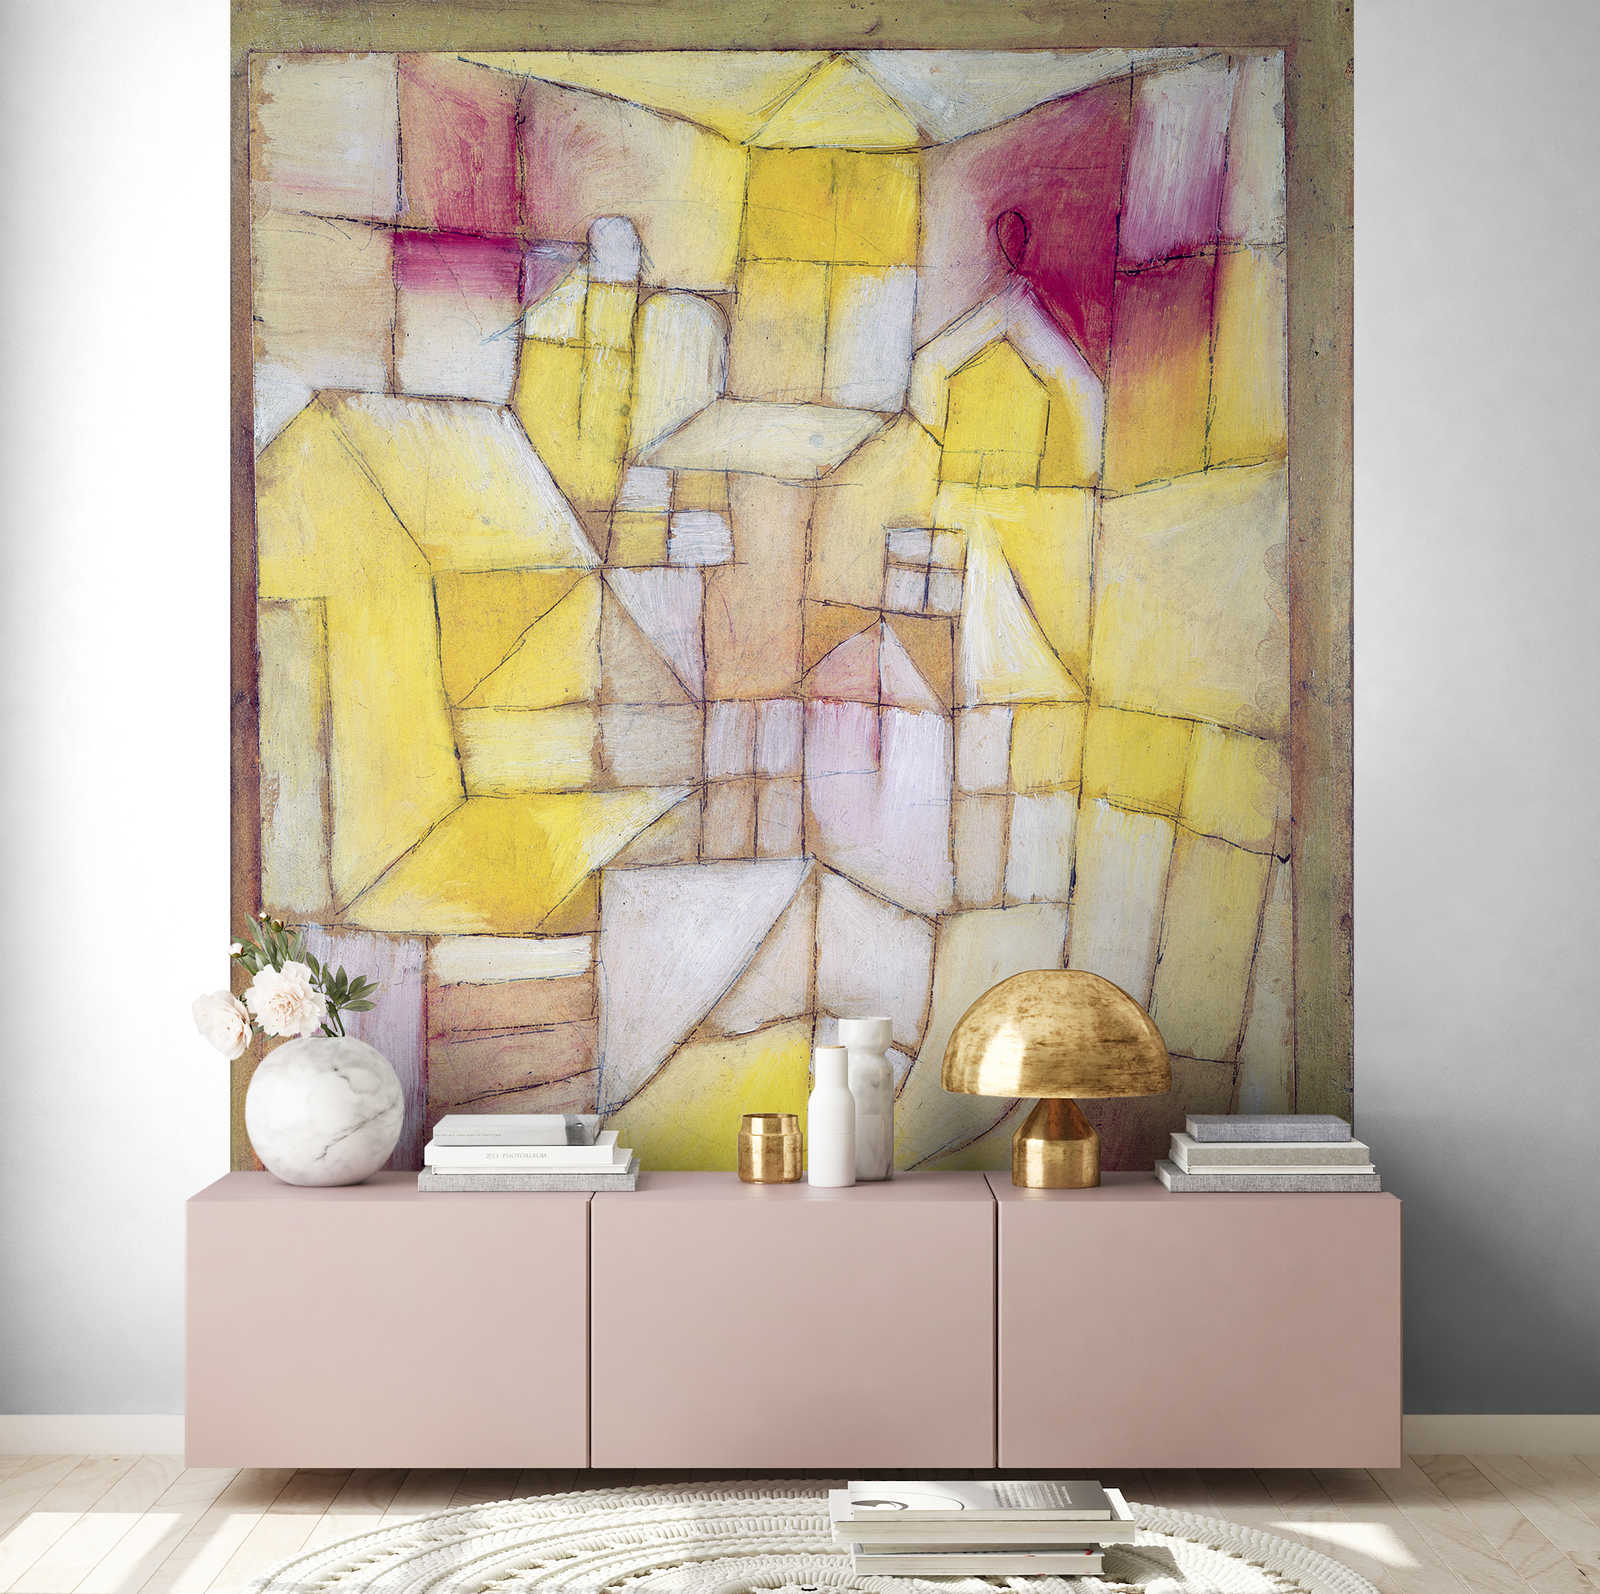             Photo wallpaper "Rose-Jaune" by Paul Klee
        